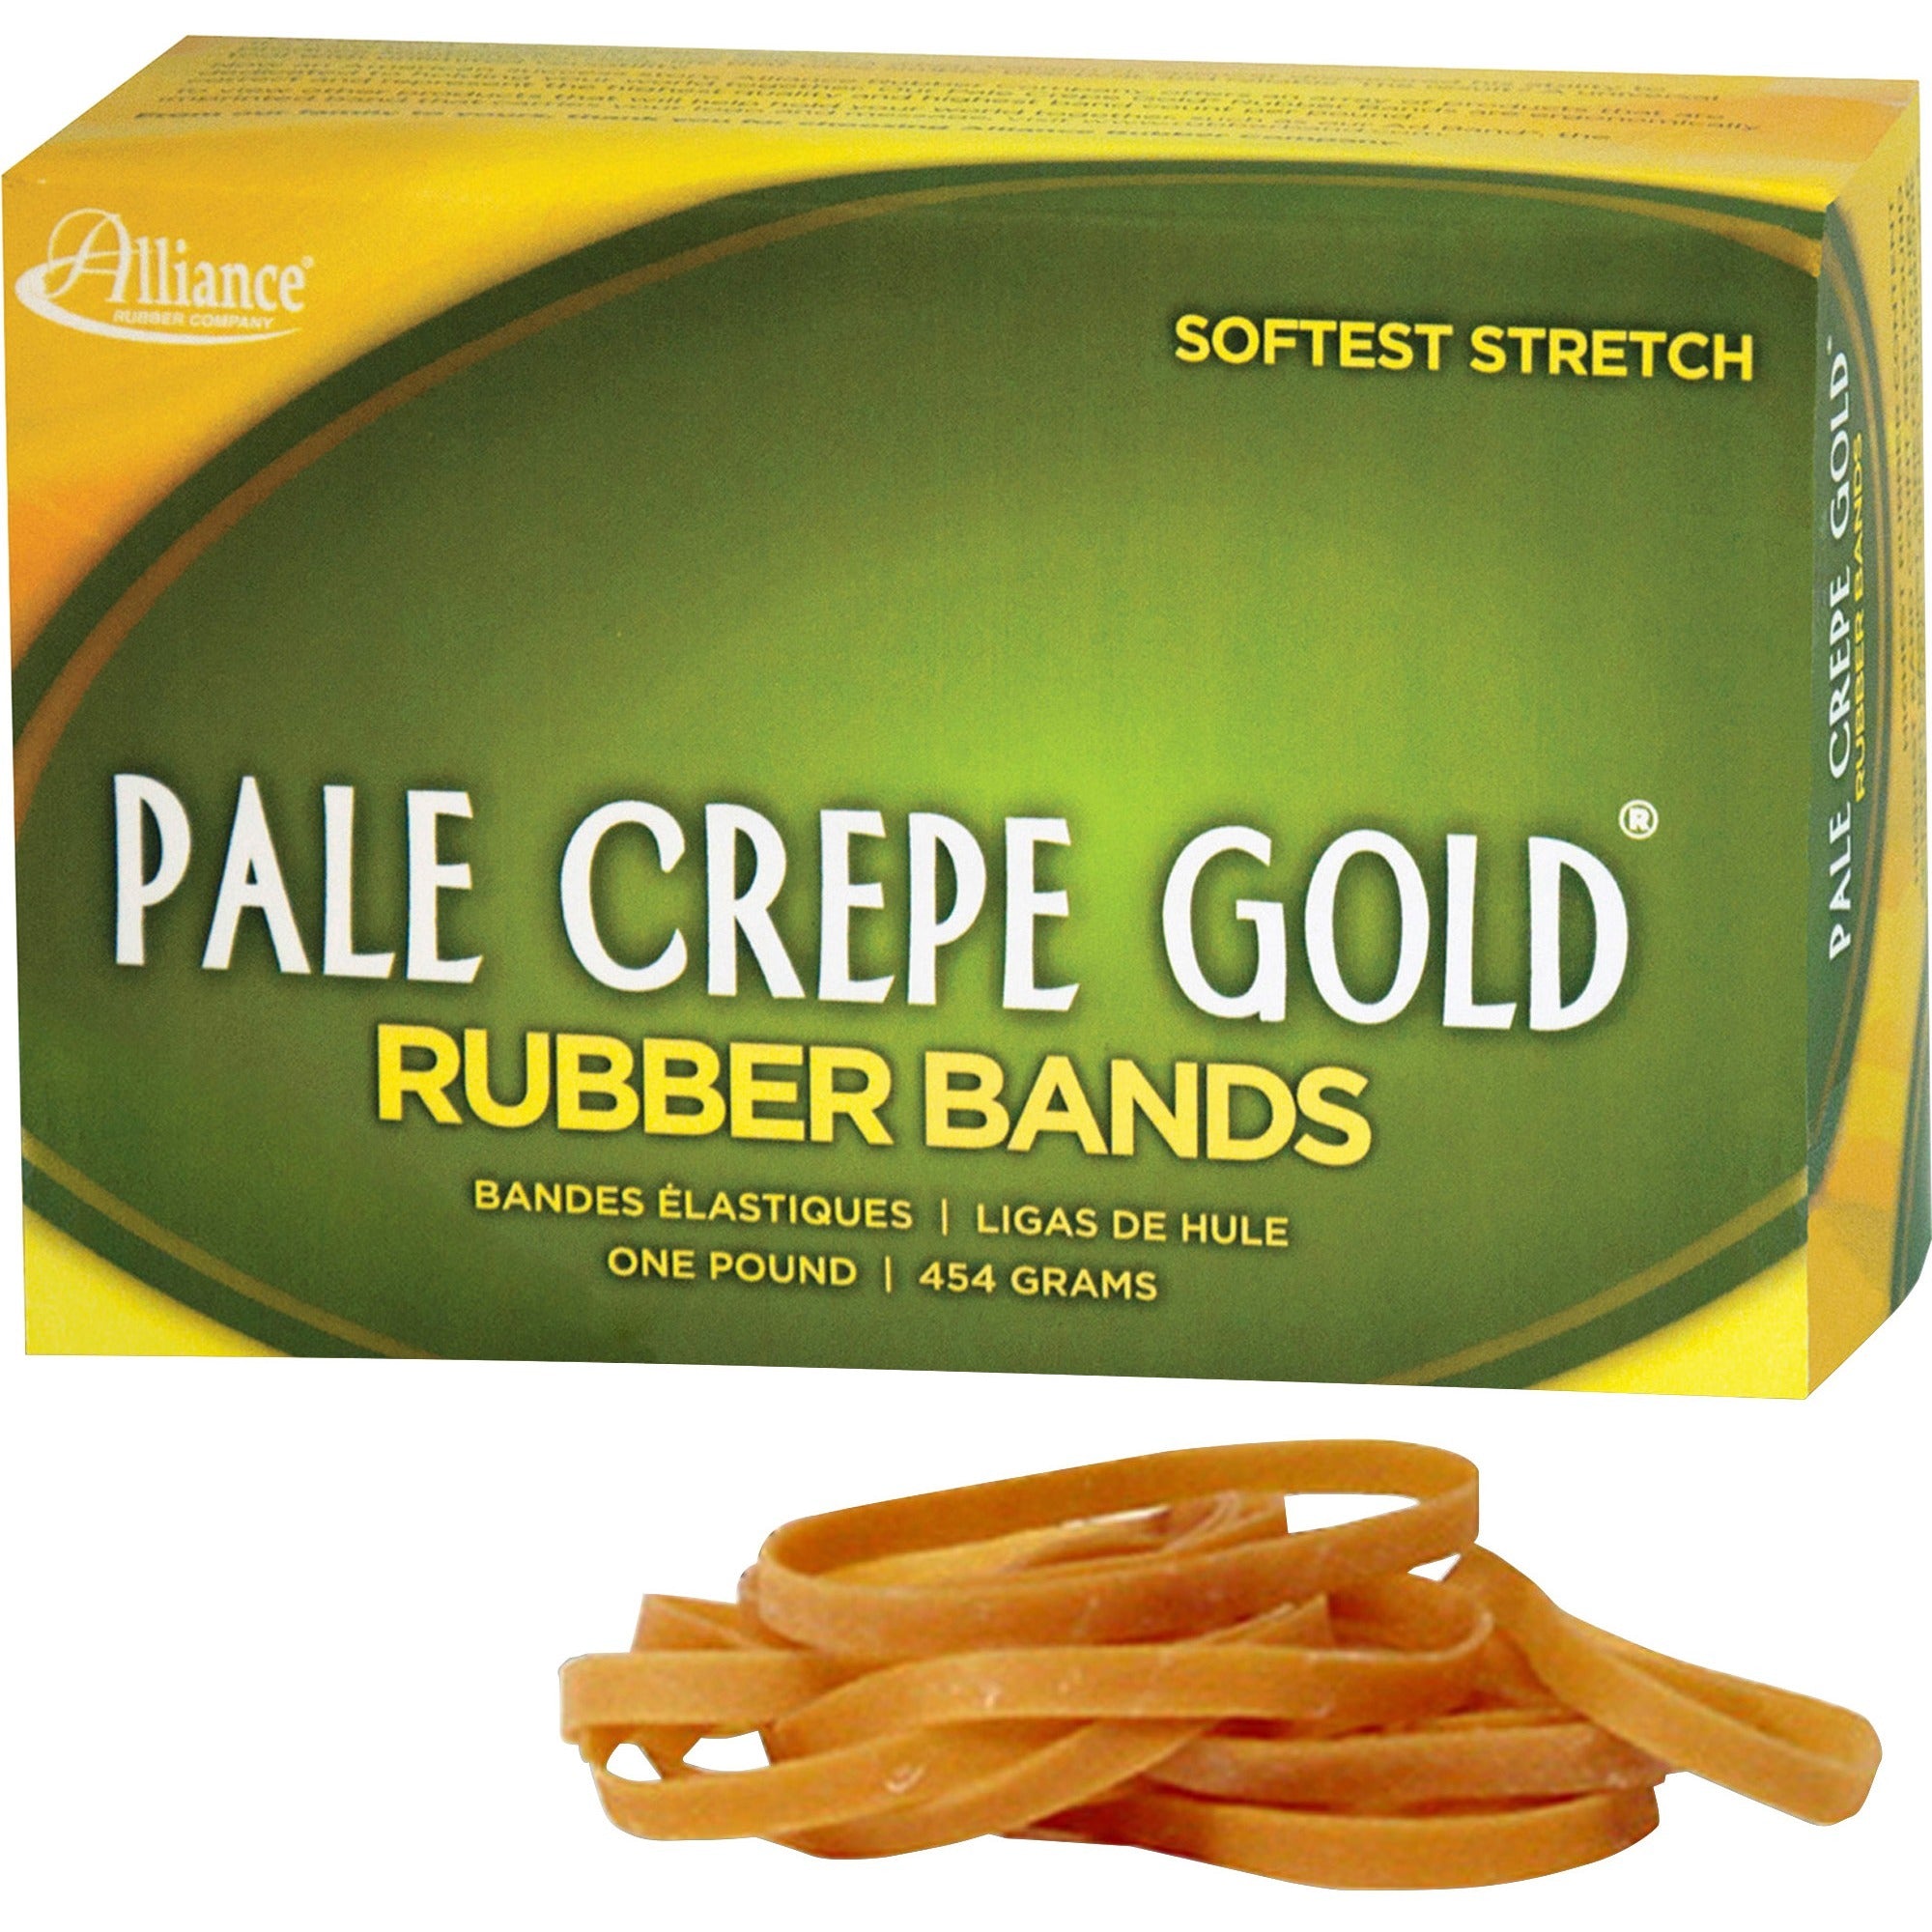 Alliance Rubber 20185 Pale Crepe Gold Rubber Bands - Size #18 - Approx. 2205 Bands - 3" x 1/16" - Golden Crepe - 1 lb Box - 